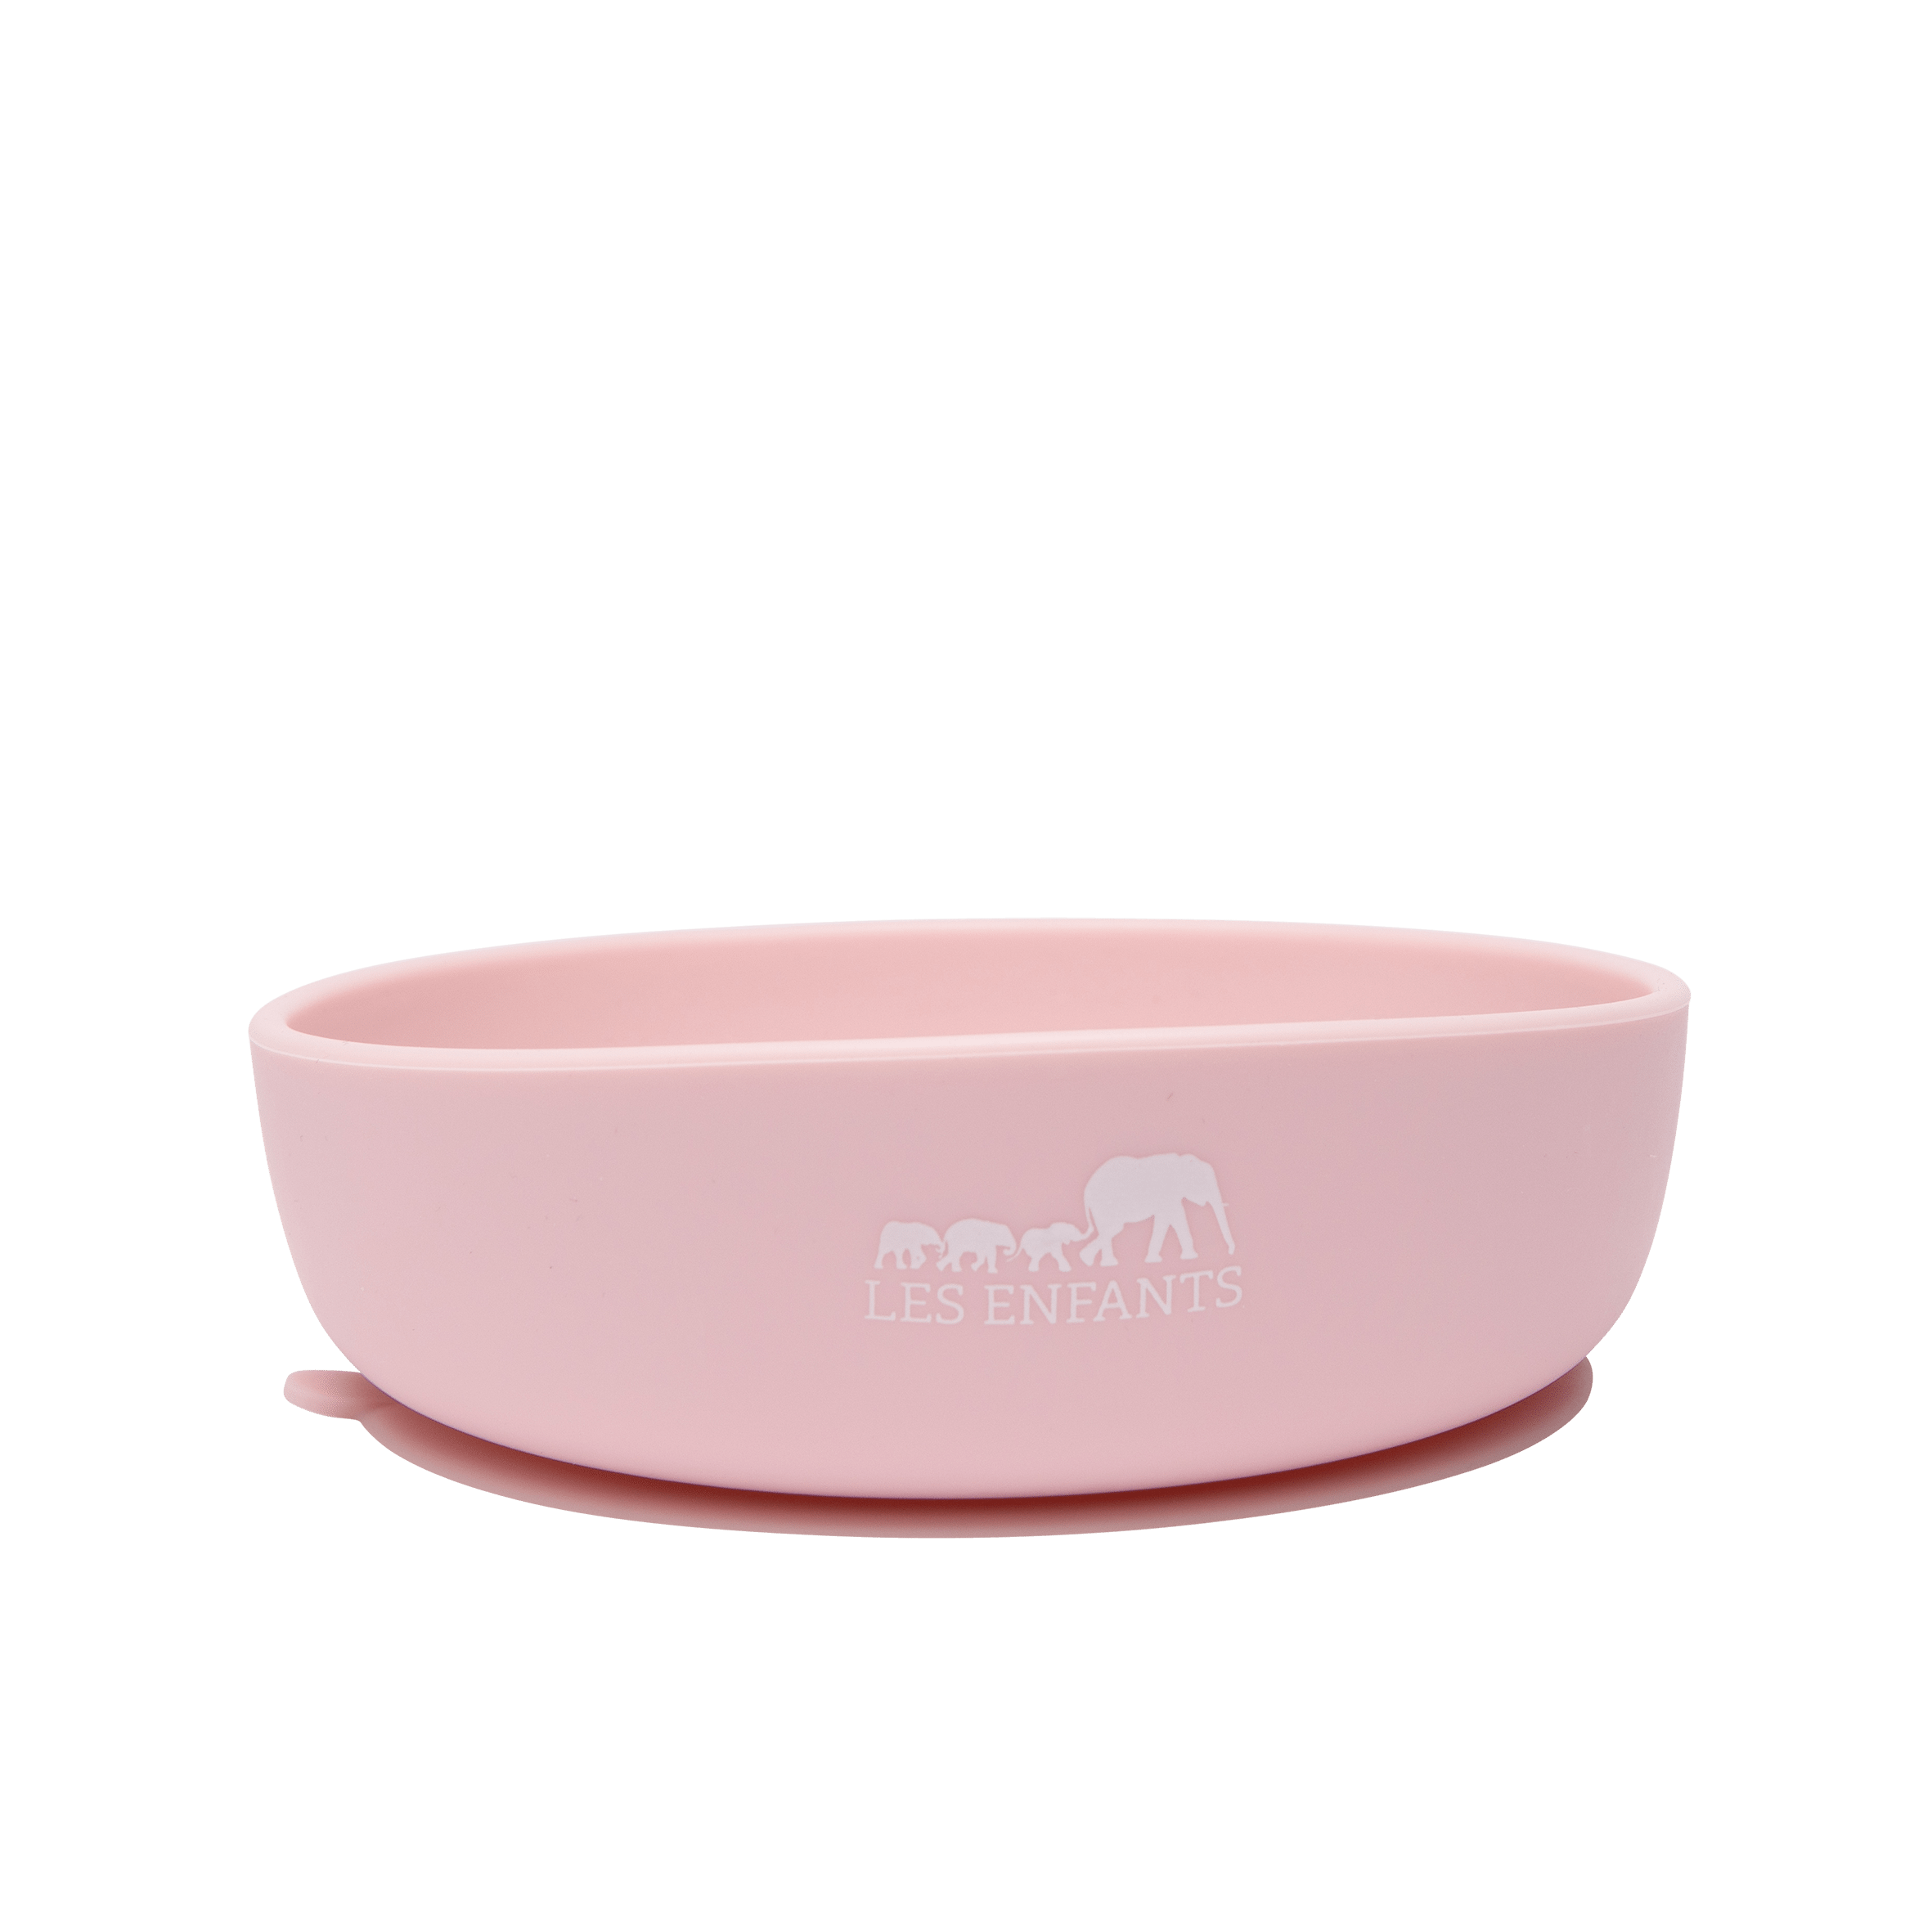 les enfants silicon bowl that sticks to surface eating collection pink showing les enfants logo